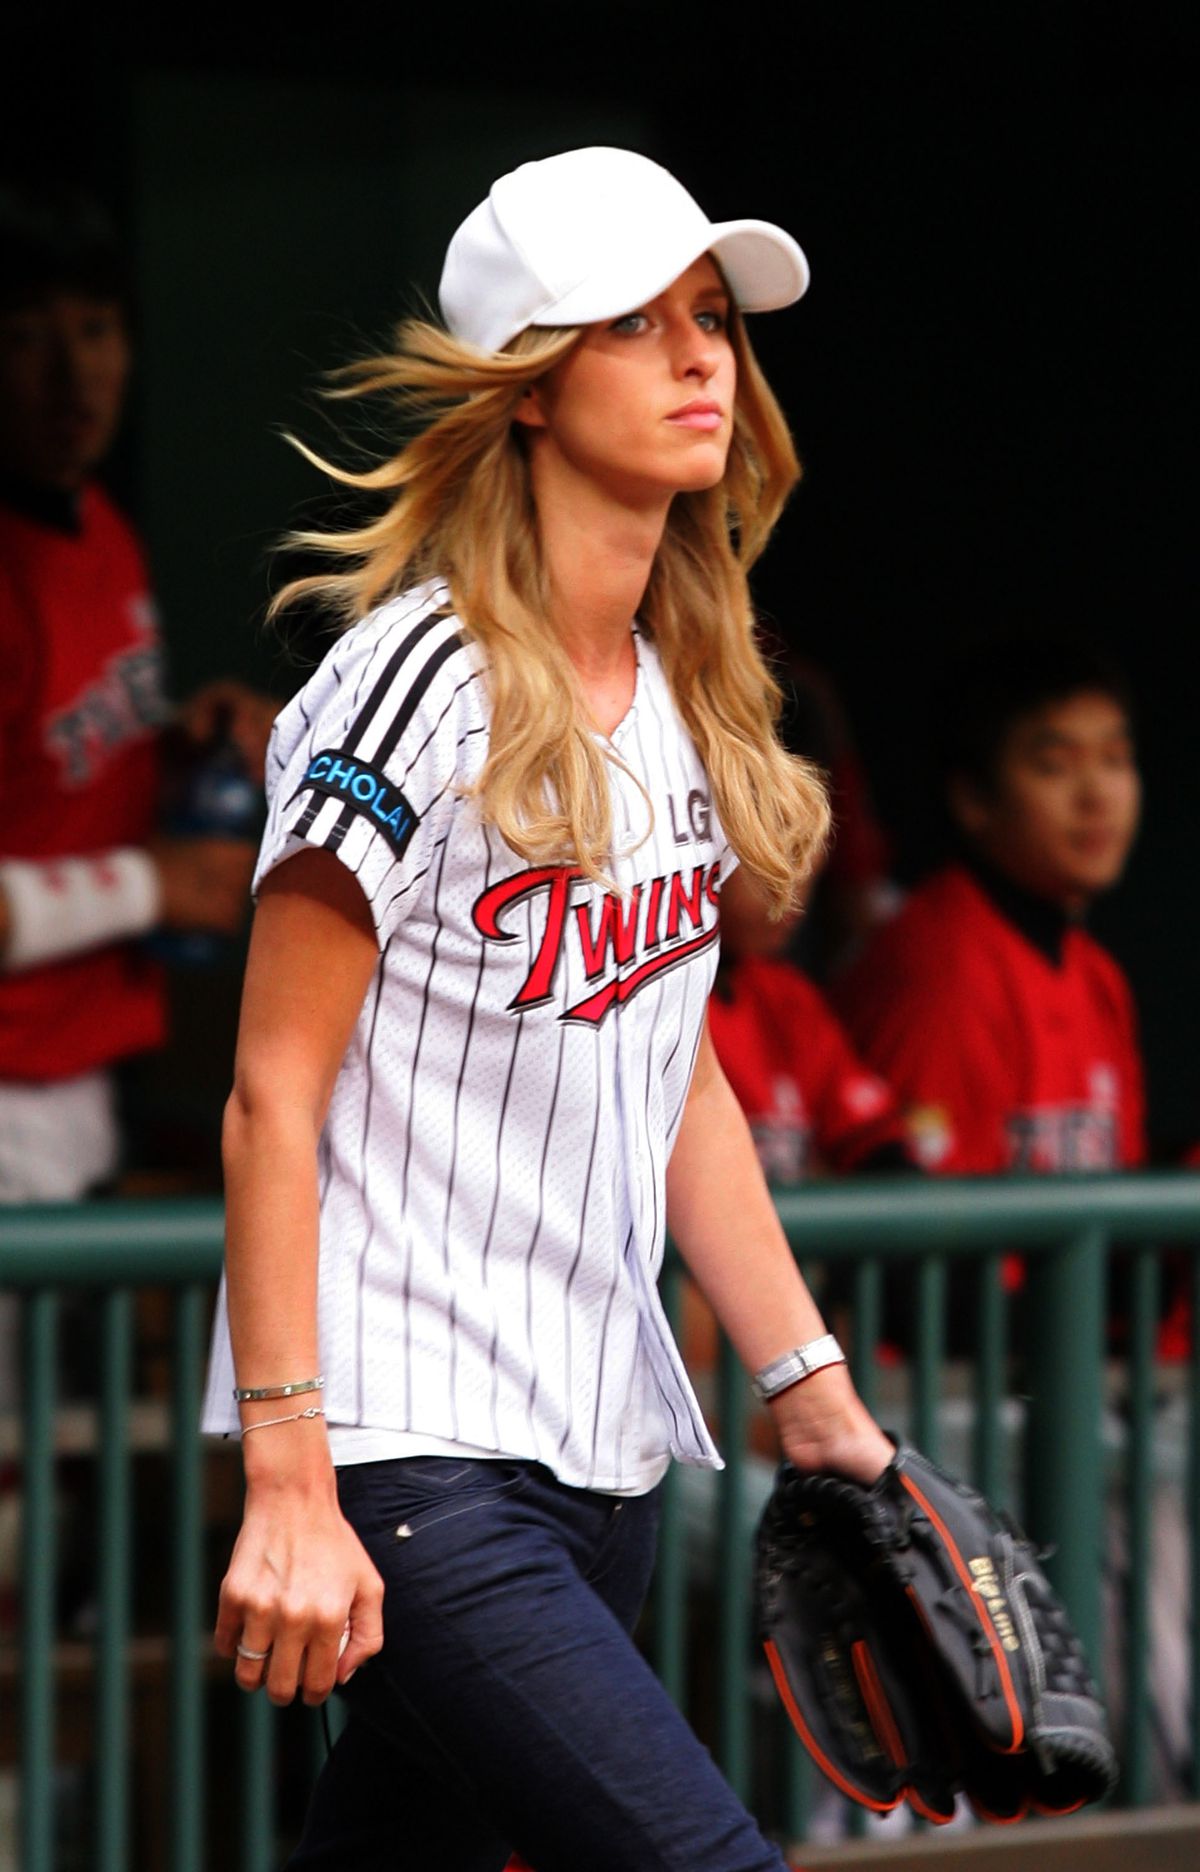 Nicky Hilton Attends LG Twins v KIA Tigers Baseball Game In Seoul